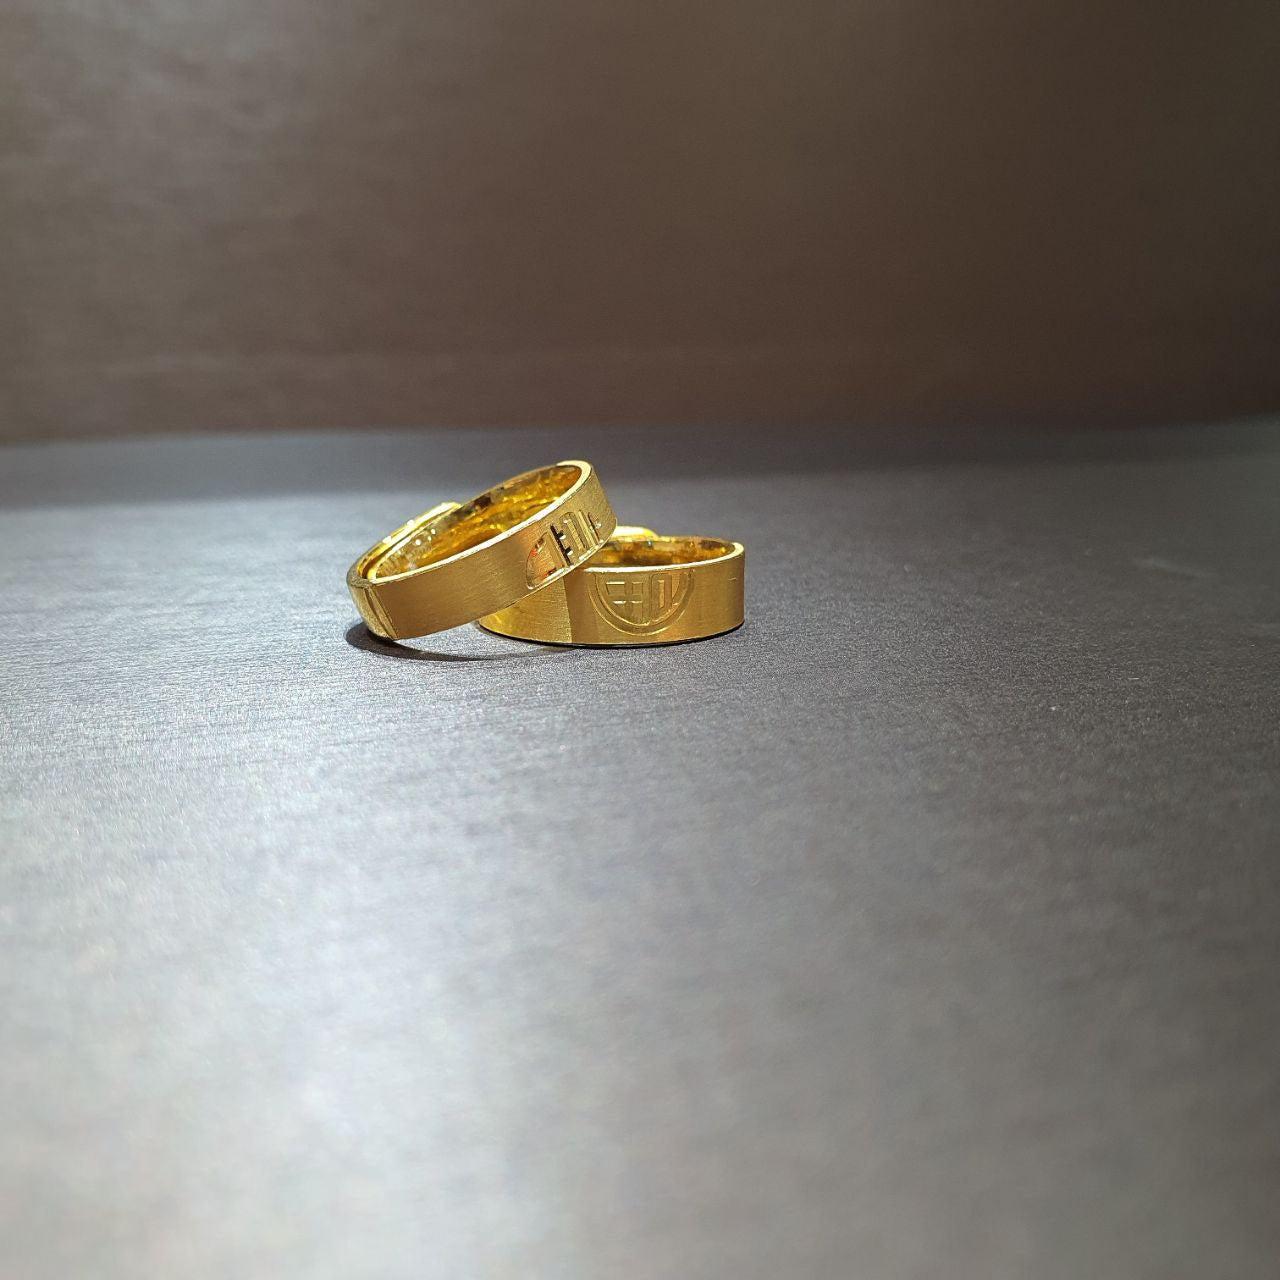 24k / 999 Gold Prosperity Couple Ring Adjustable-Rings-Best Gold Shop